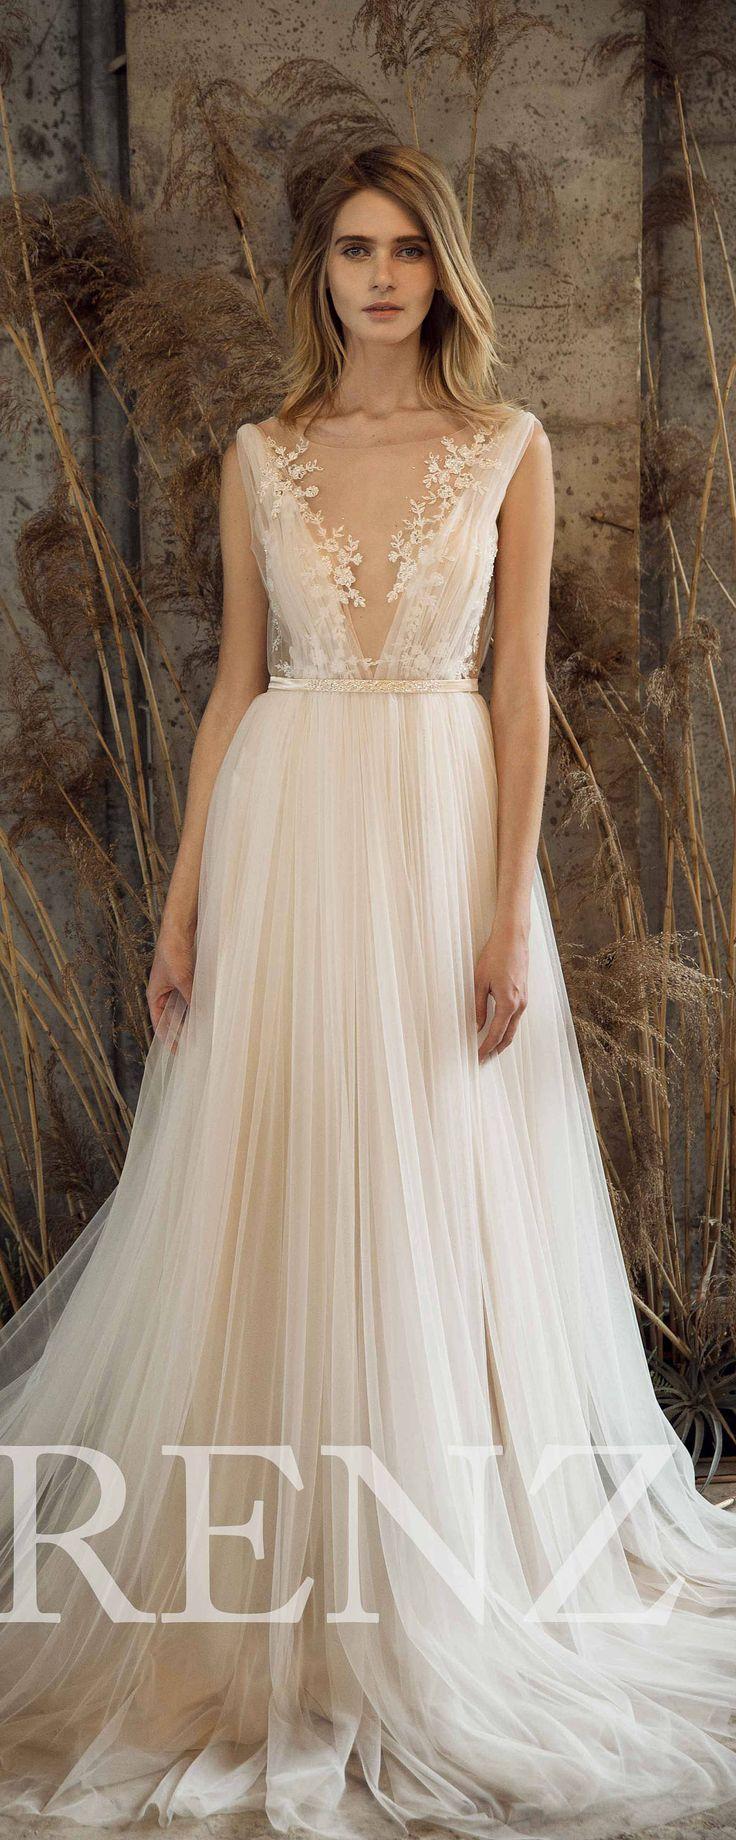 Hochzeit - Wedding Dress Off White Tulle Dress,V Neck Bridal Dress,Lace Illusion Backless Bride Dress Train Maxi Dress,Sleeveless Evening Dress(LW192)